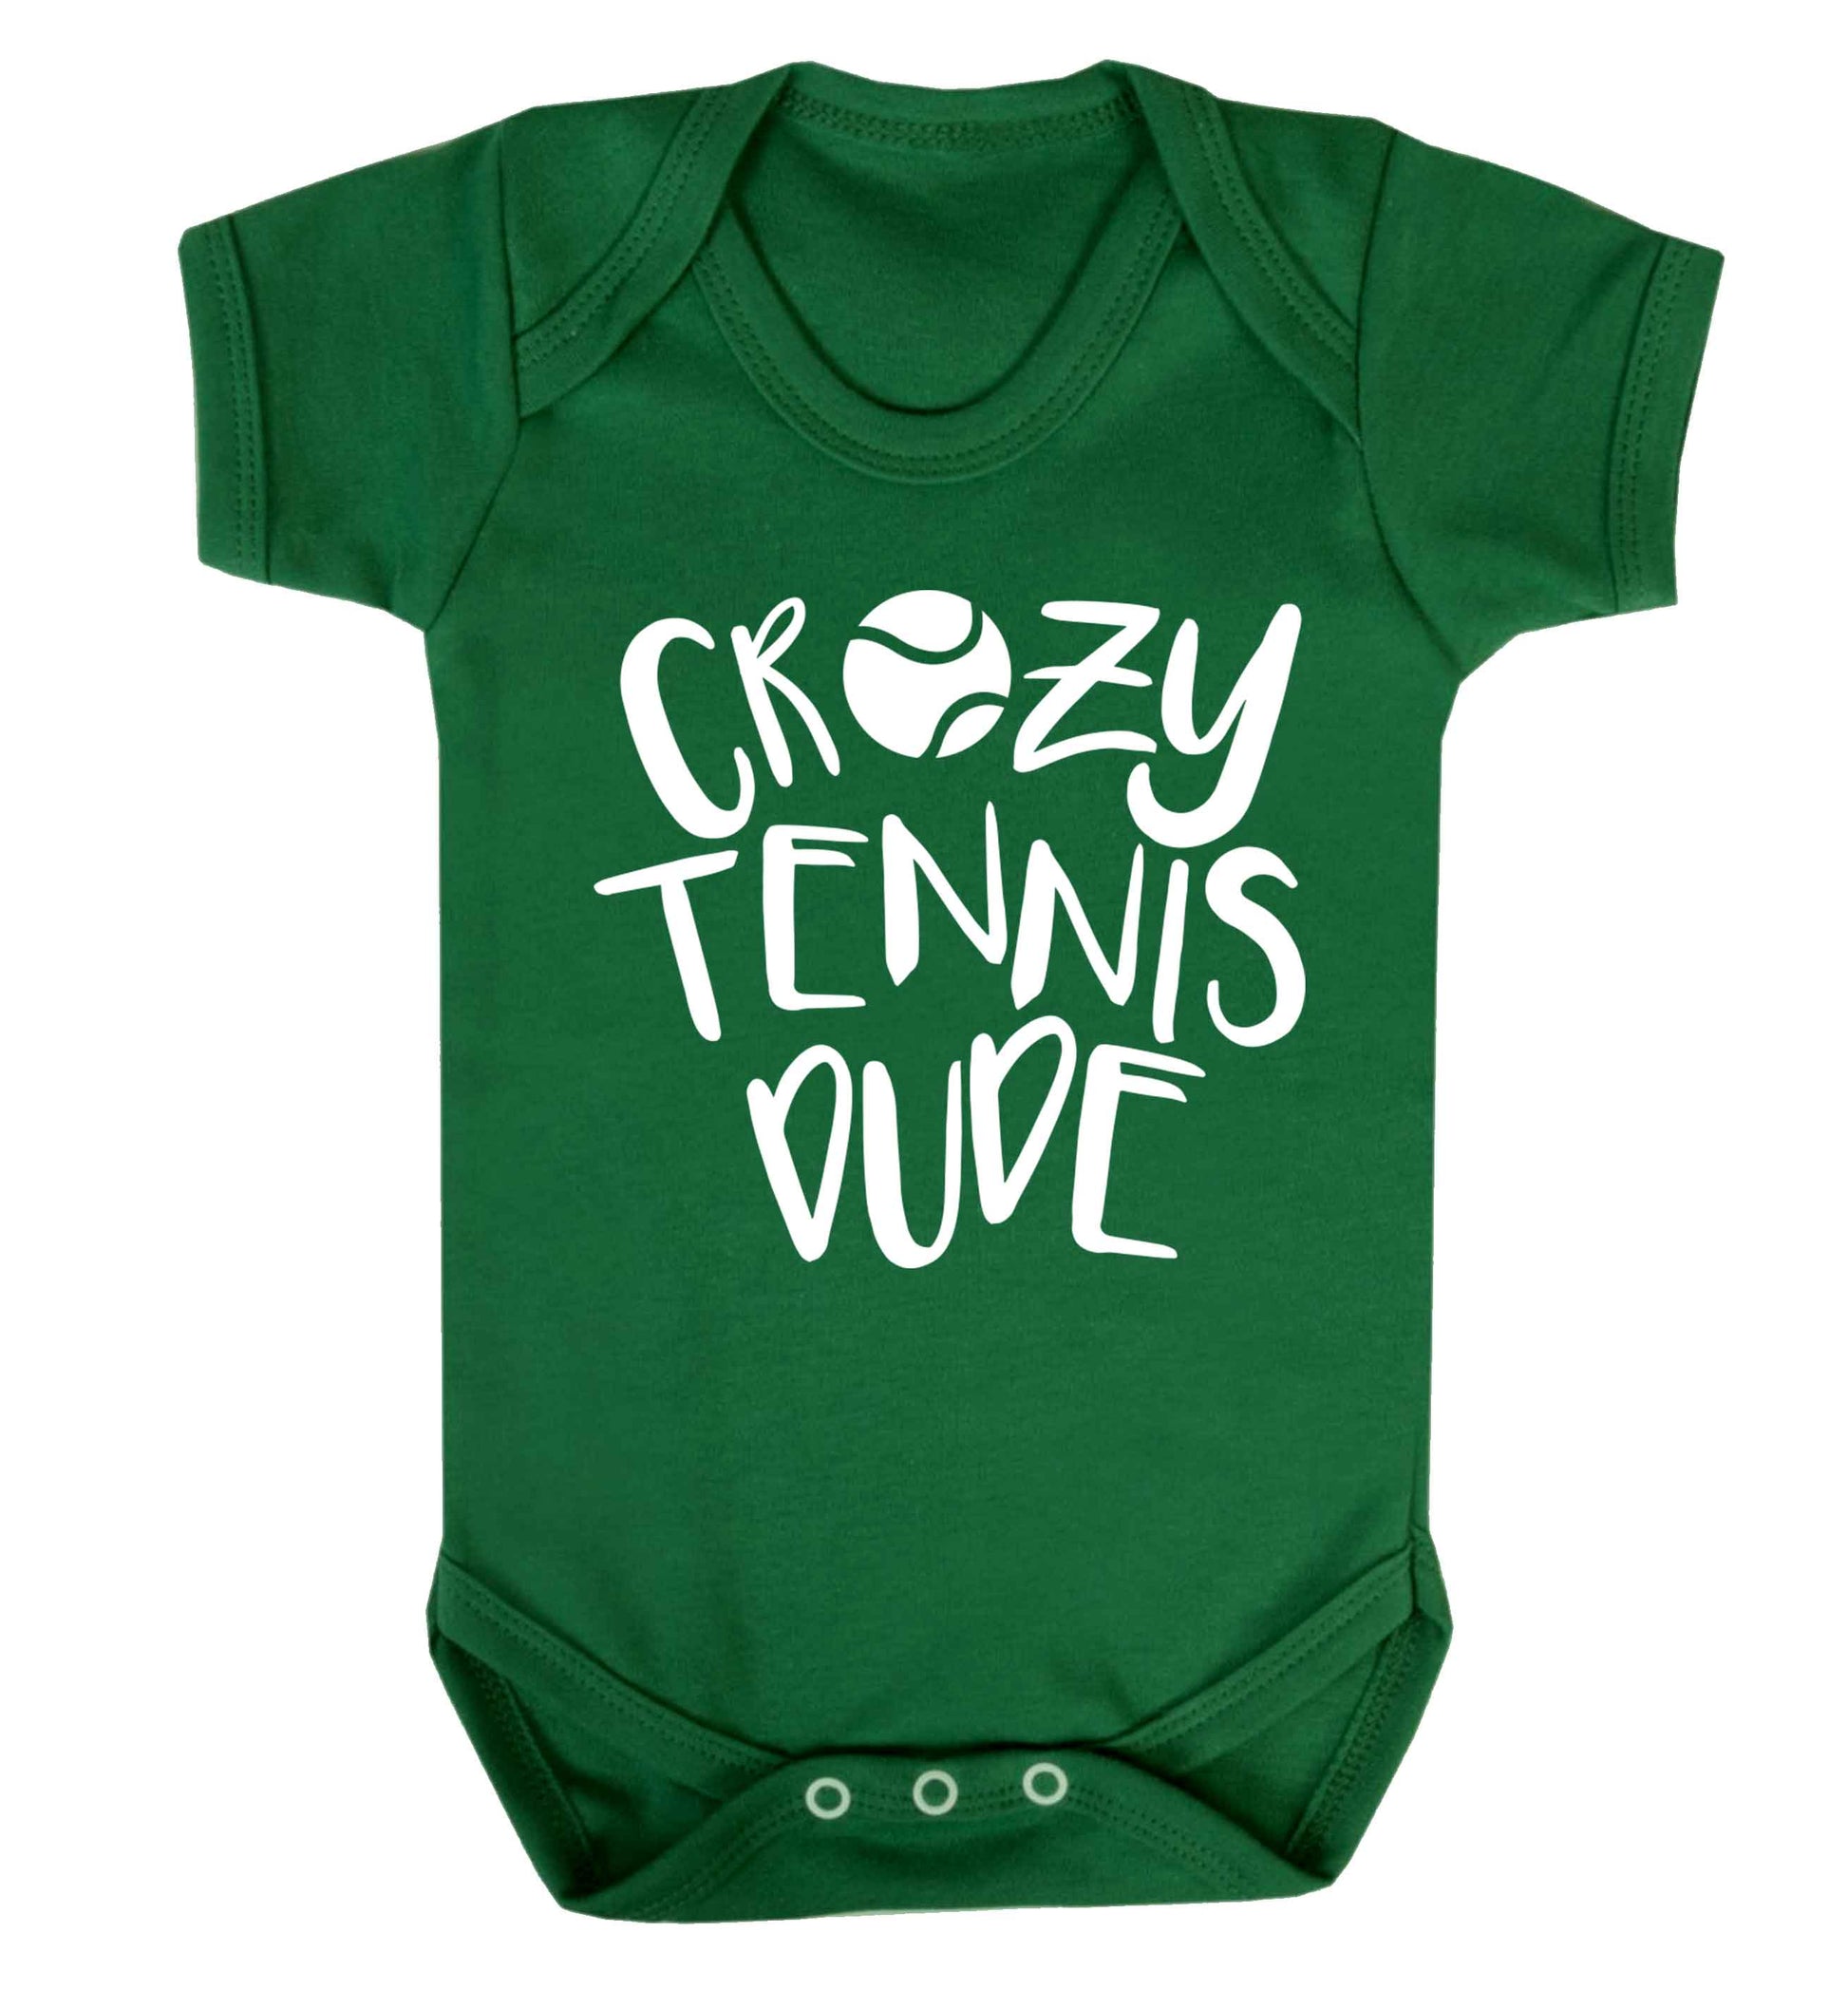 Crazy tennis dude Baby Vest green 18-24 months